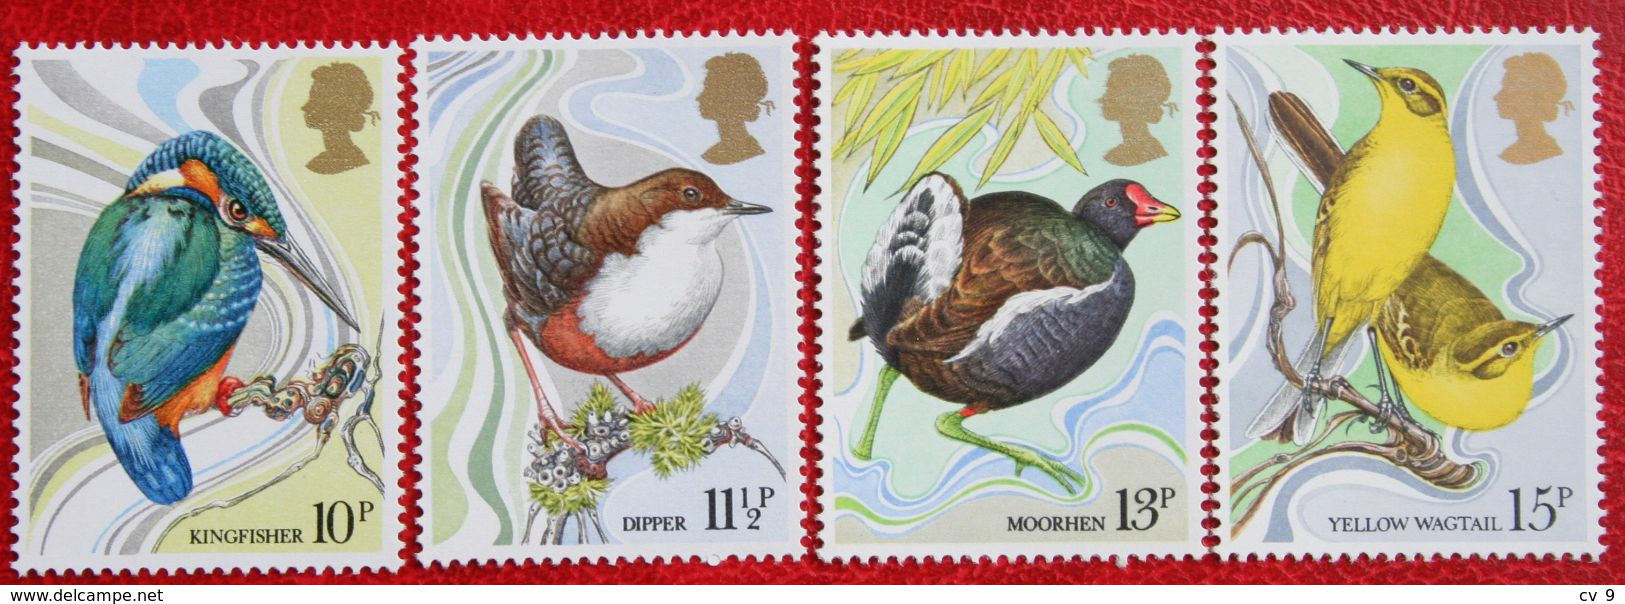 Bird Vogel Oiseau Pajaro Kingfisher (Mi 817-820) 1980 POSTFRIS MNH ** ENGLAND GRANDE-BRETAGNE GB GREAT BRITAIN - Nuovi